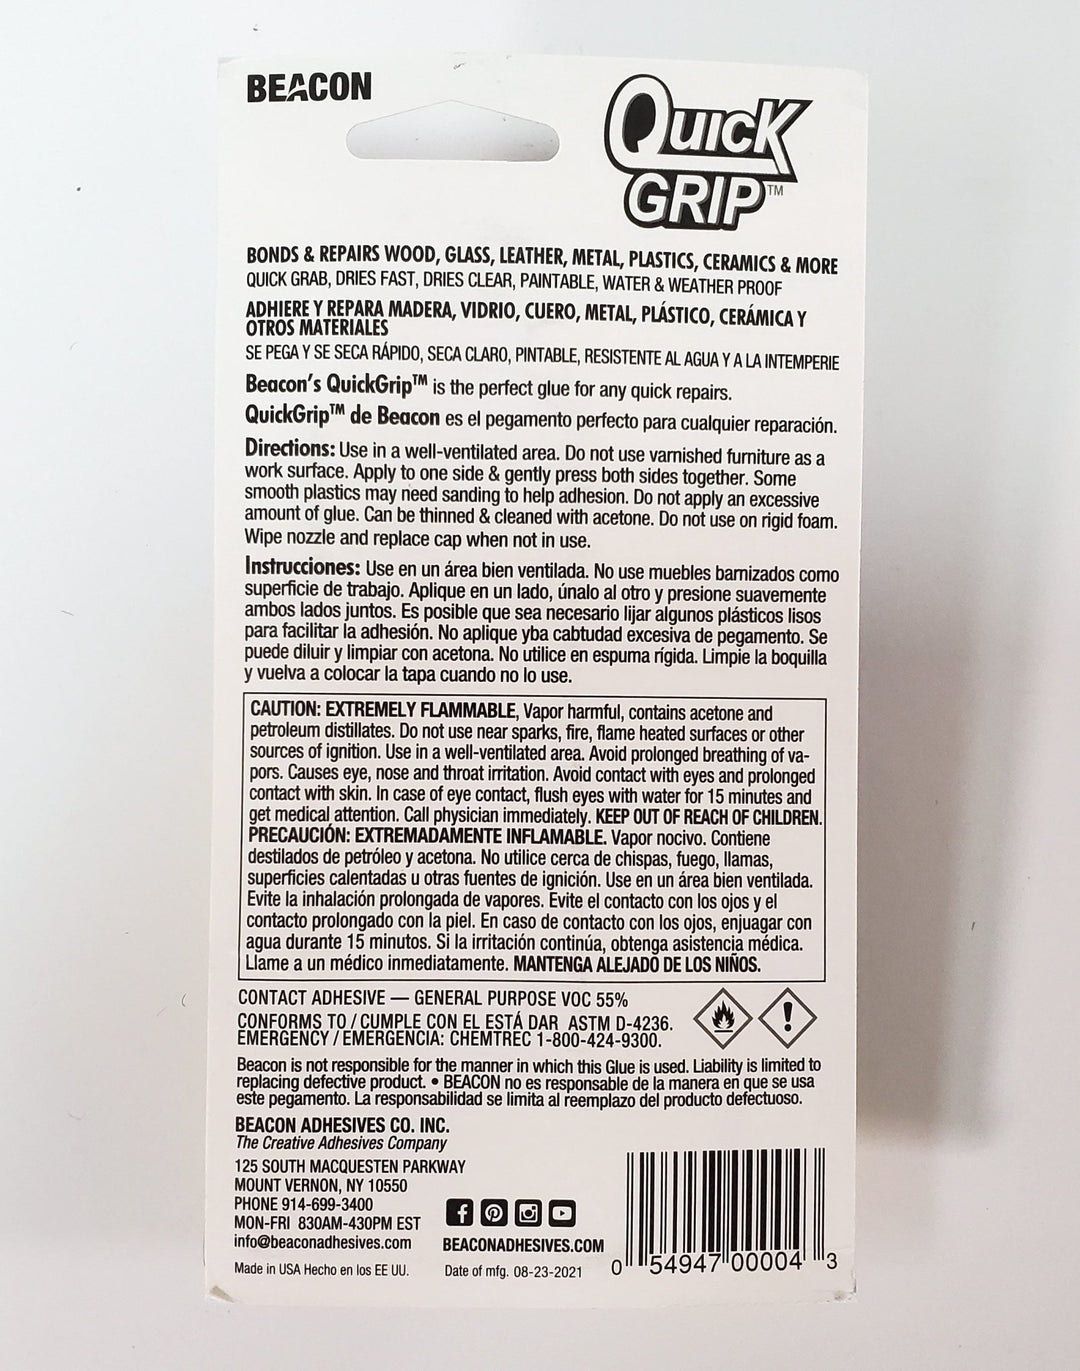 Quick Grip - Beacon Adhesives